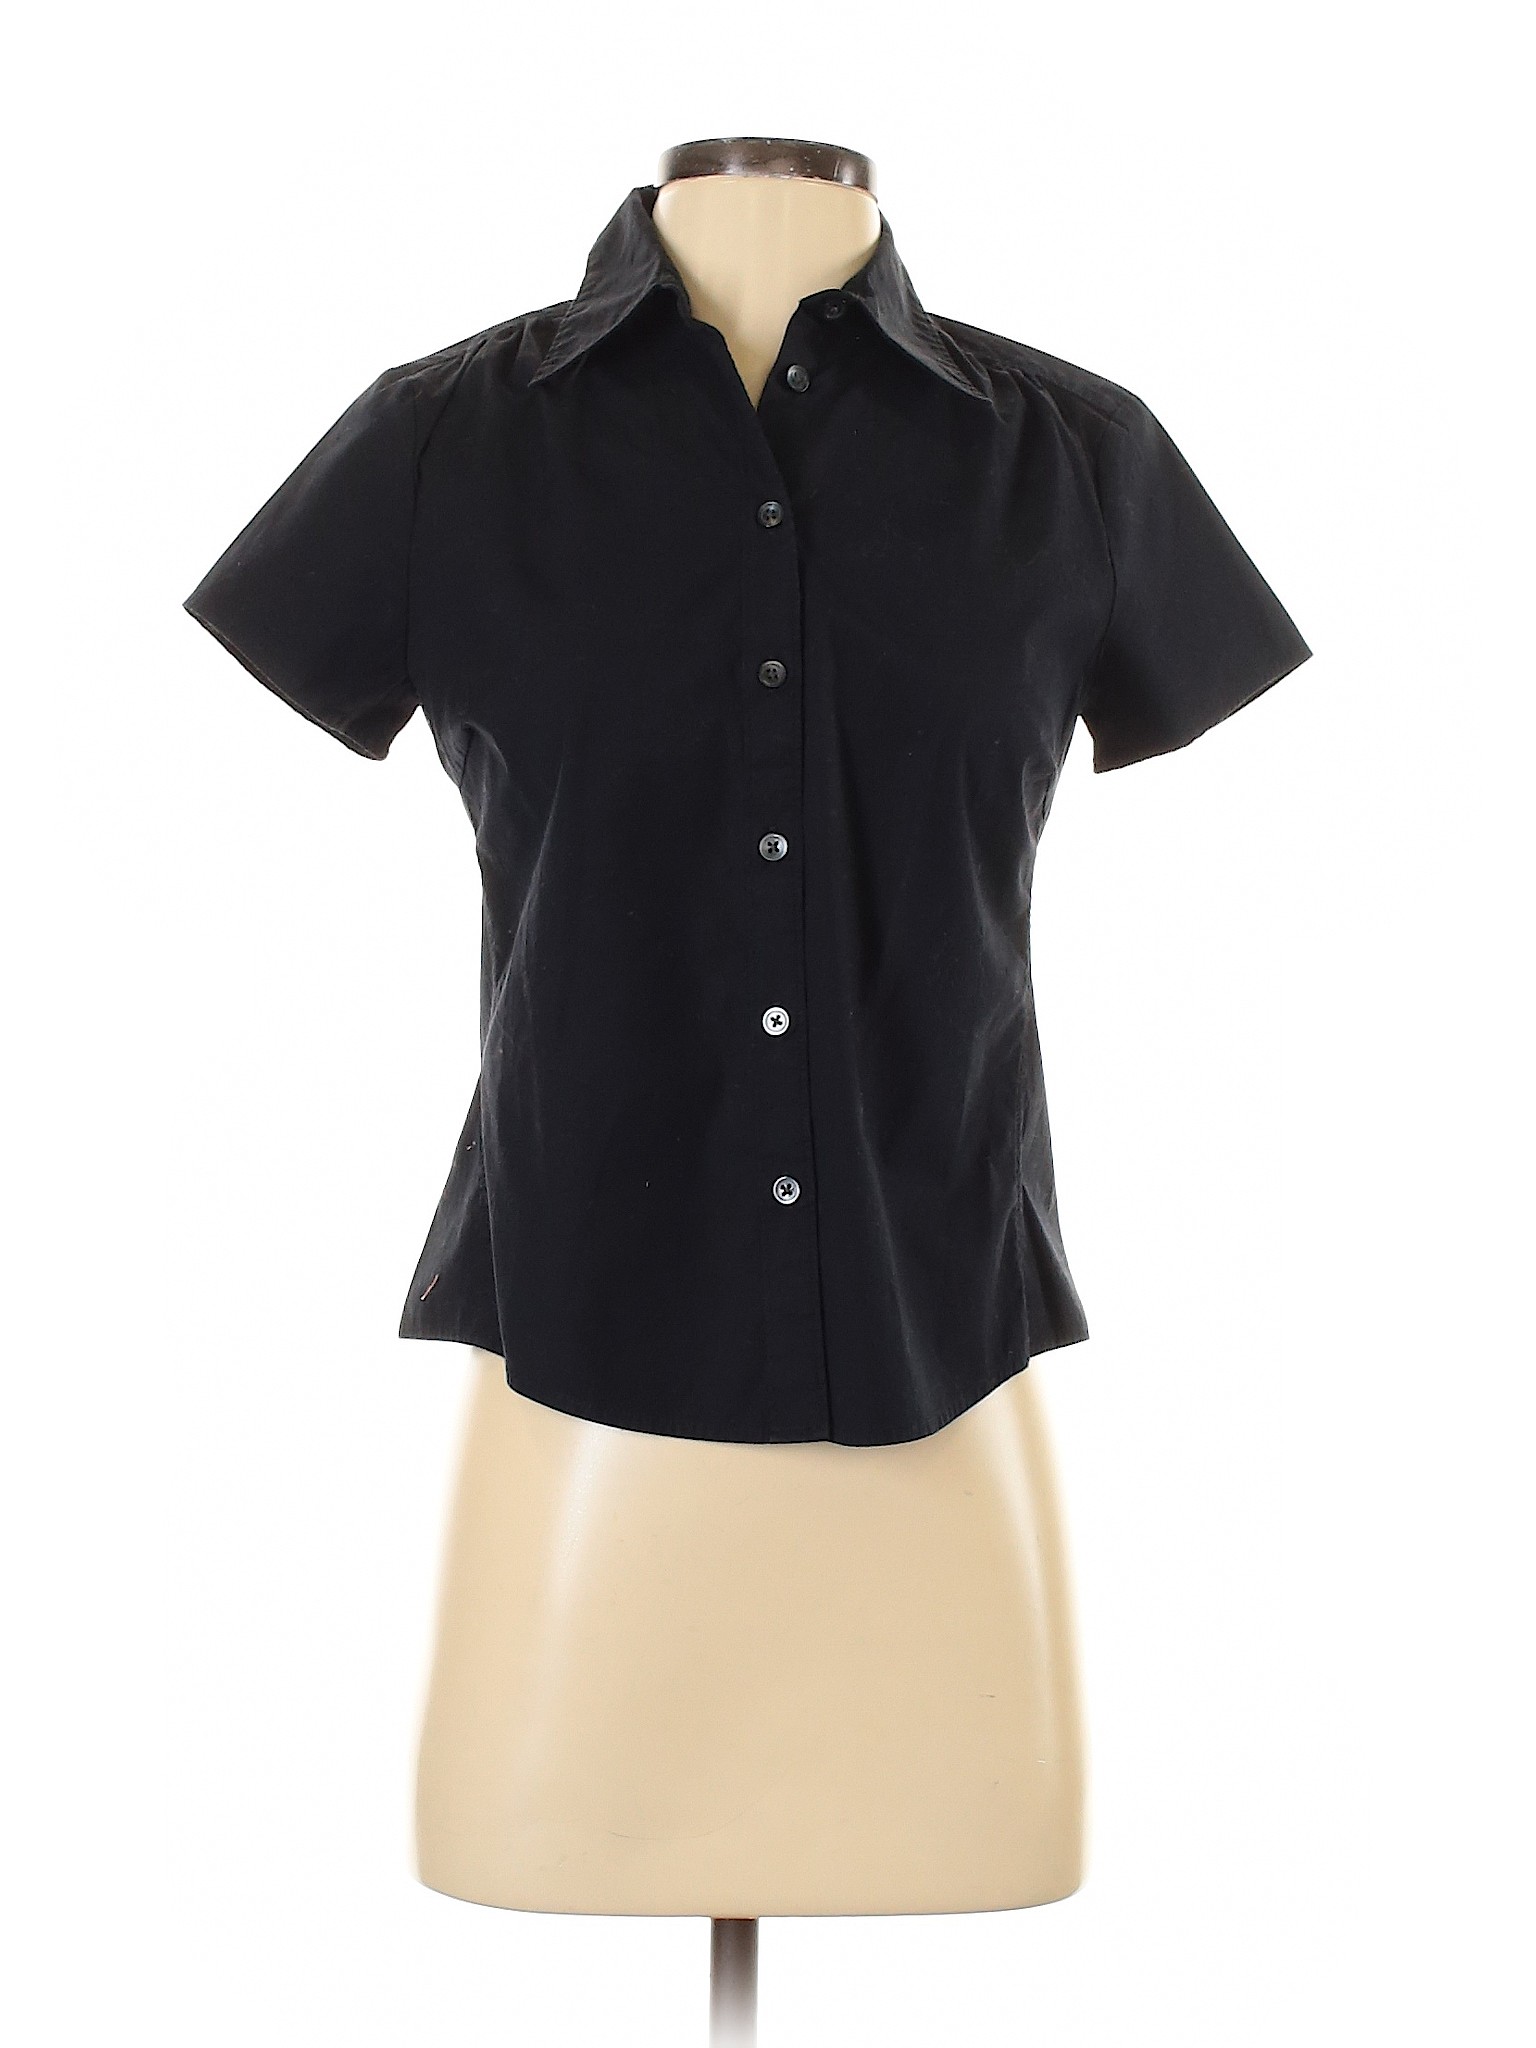 Gap Women Black Short Sleeve Button-Down Shirt XS | eBay